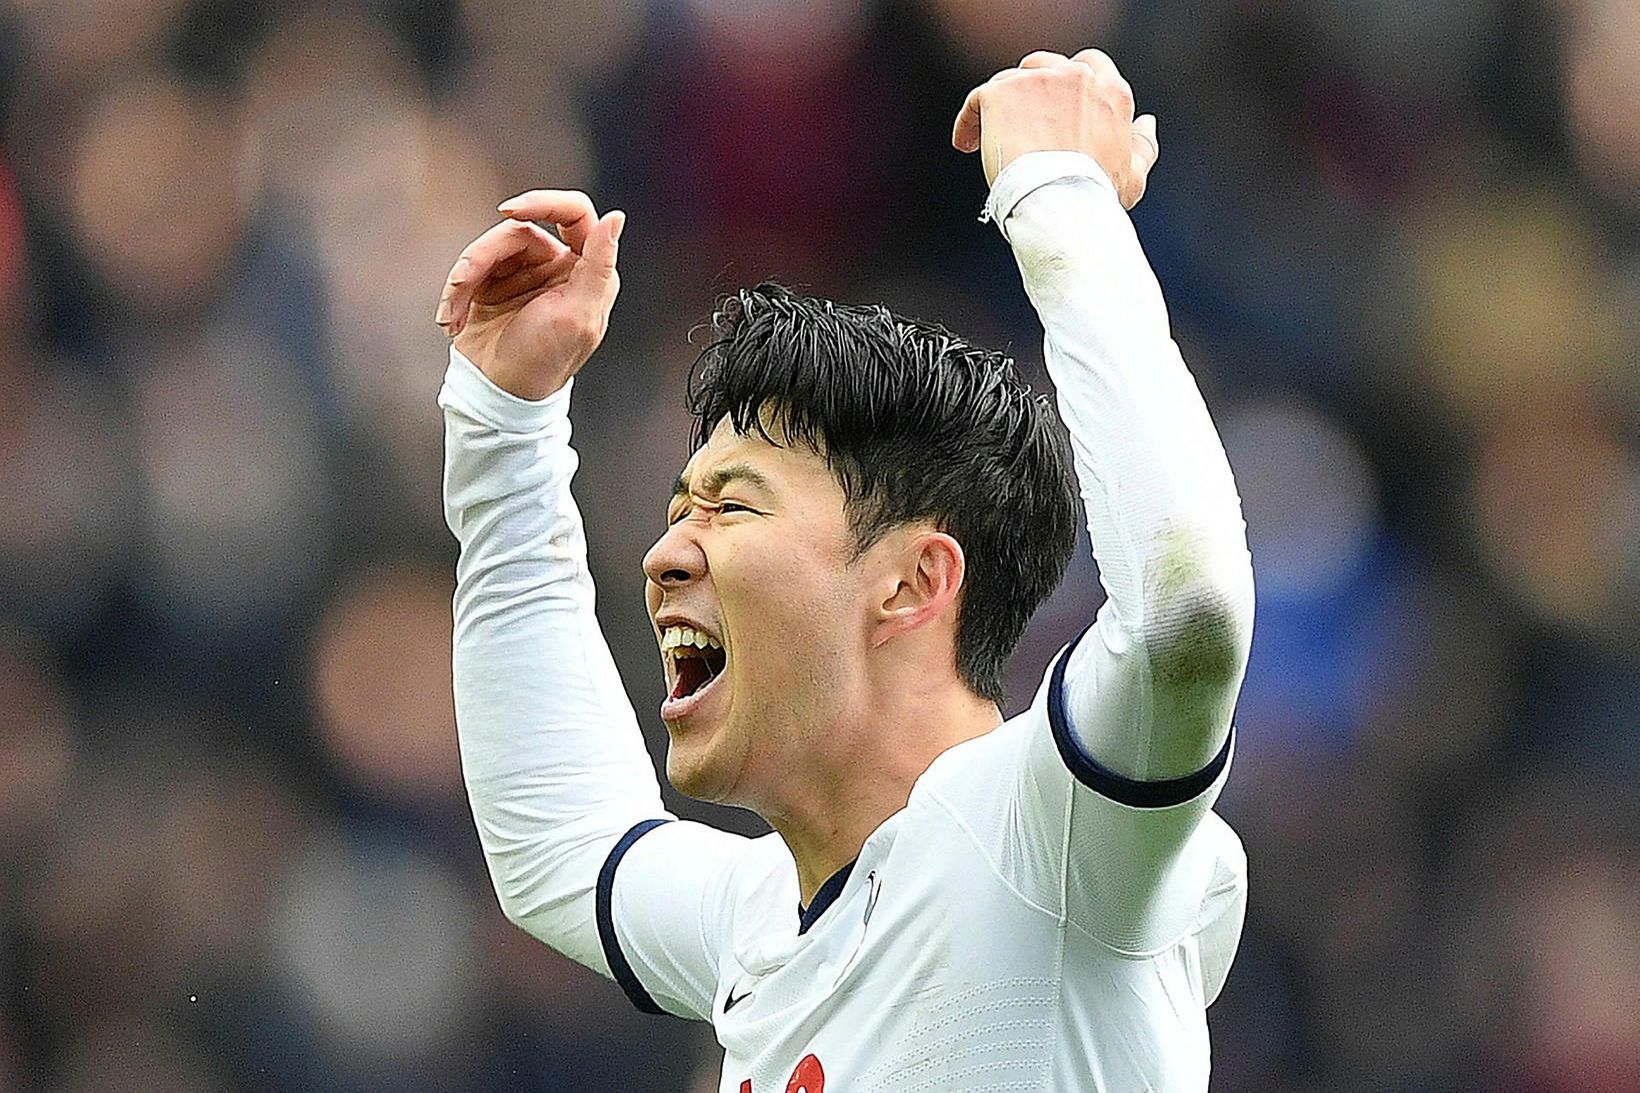 Heung-min Son fagnar sigurmarki sínu gegn Aston Villa um helgina …